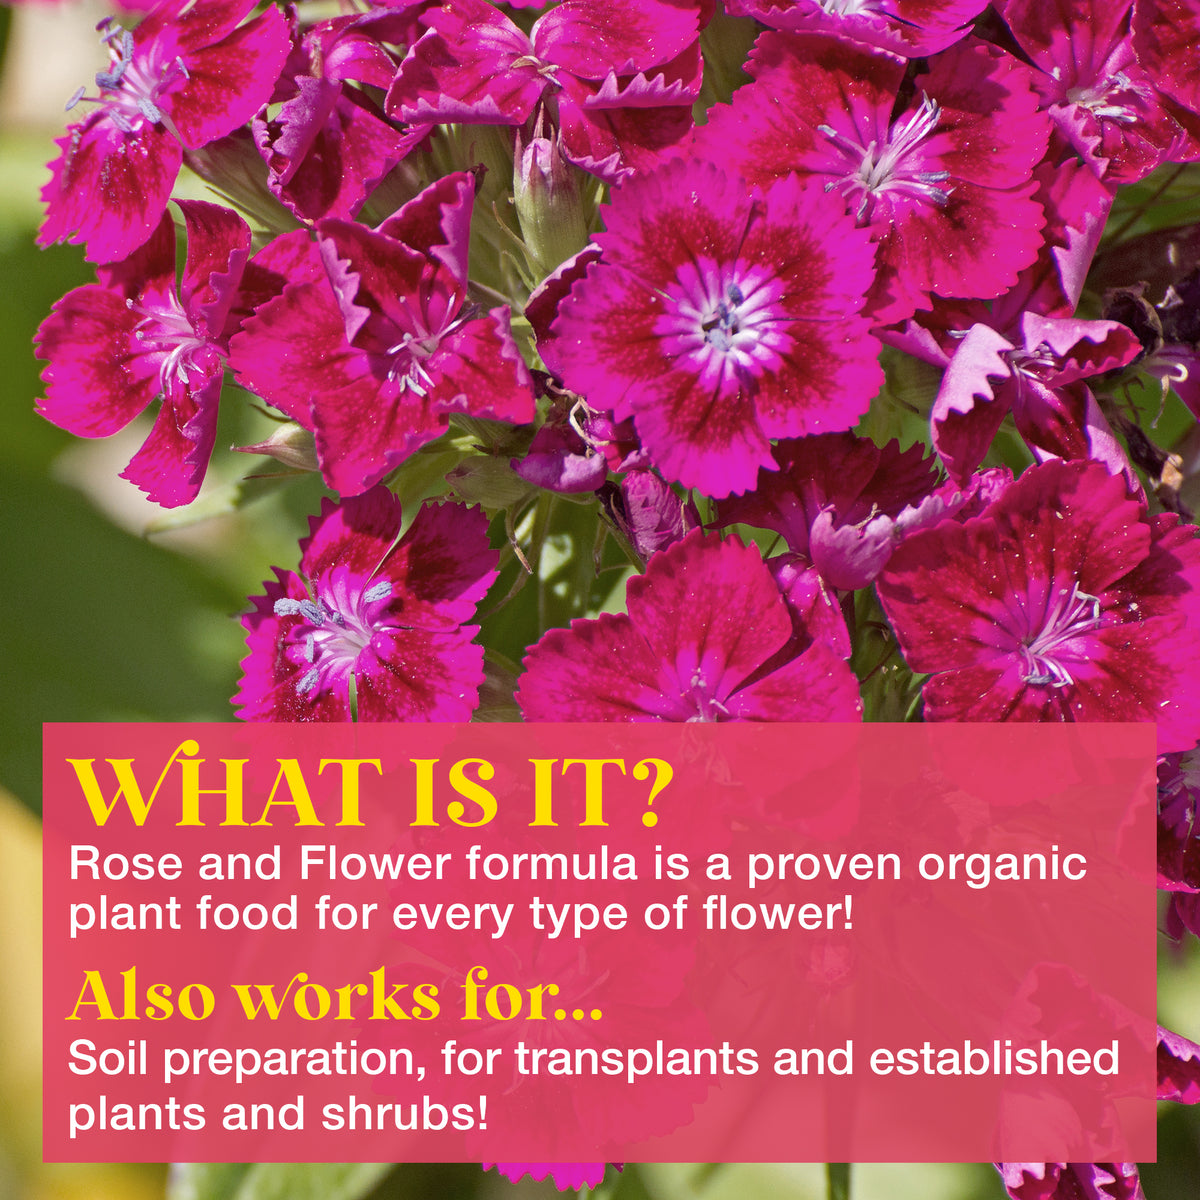 Rose &amp; Flower | Organic Plant Food